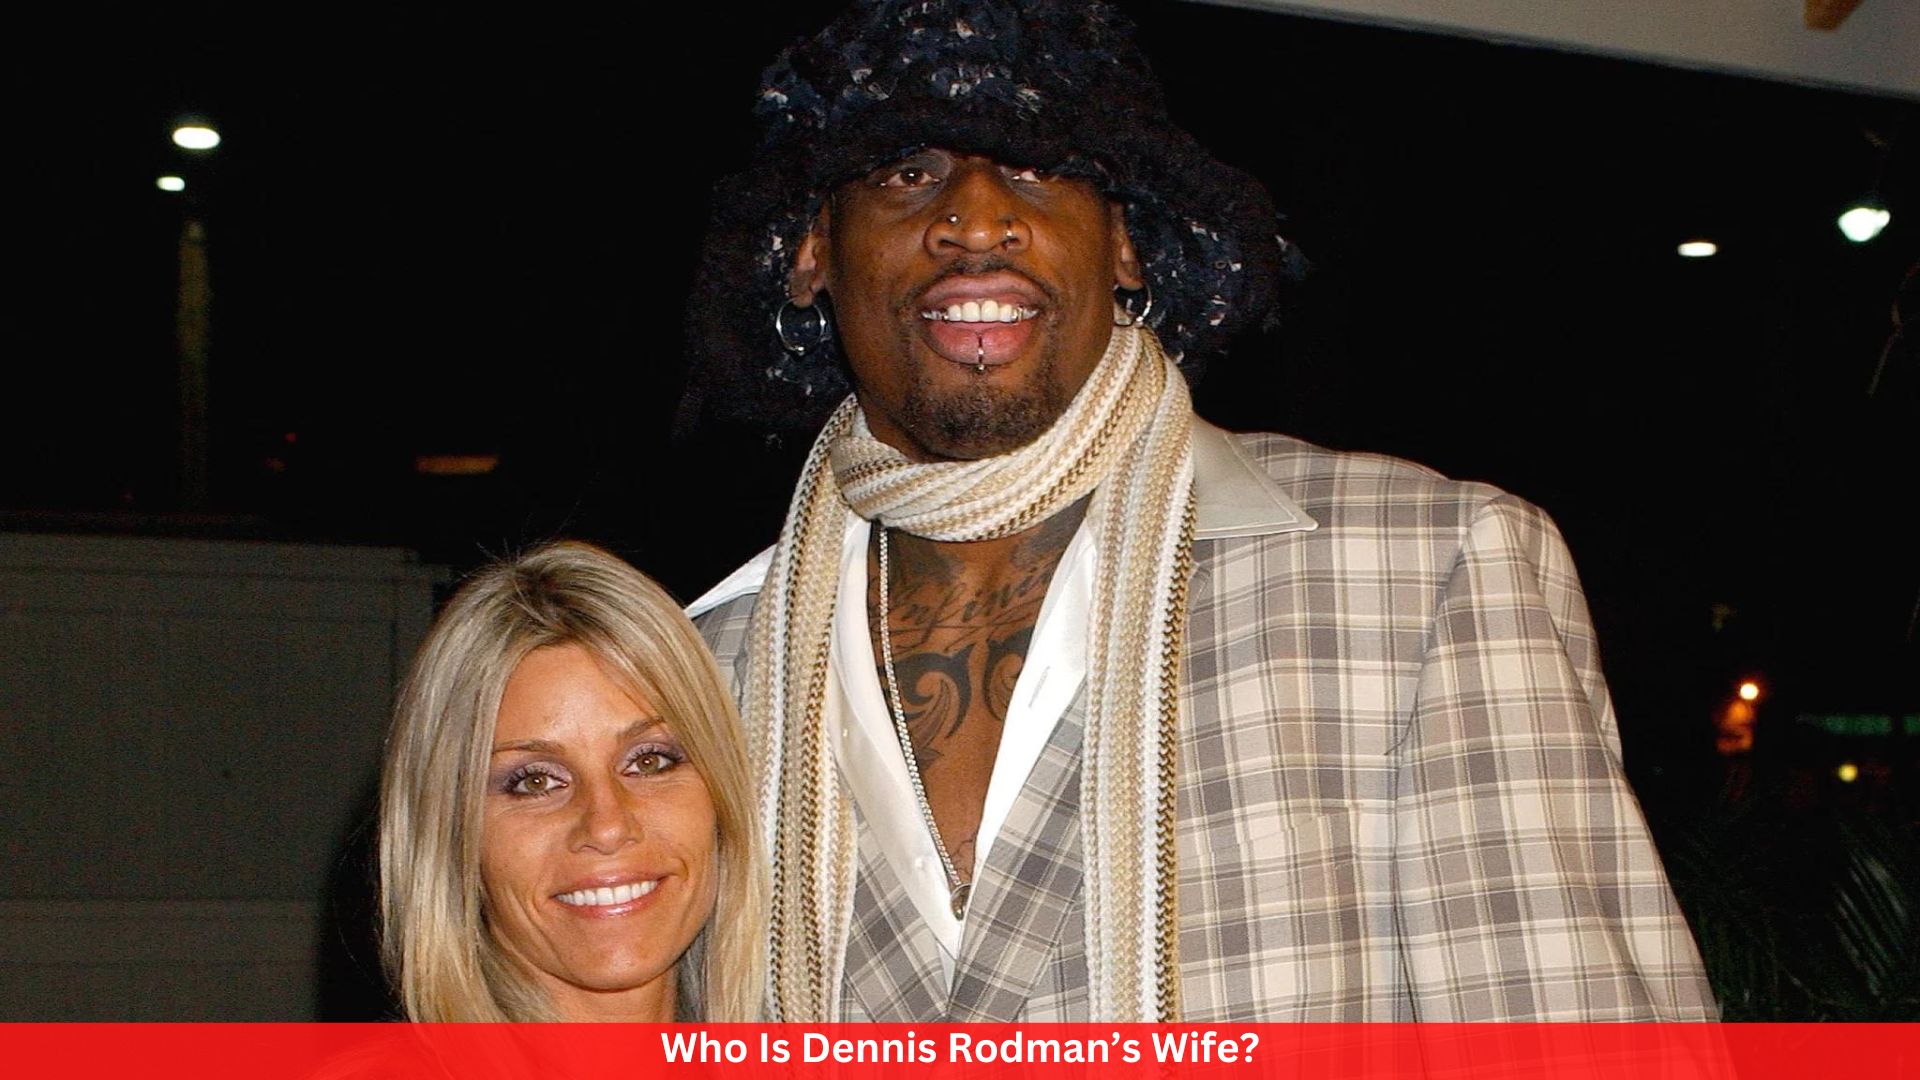 Who Is Dennis Rodman’s Wife?